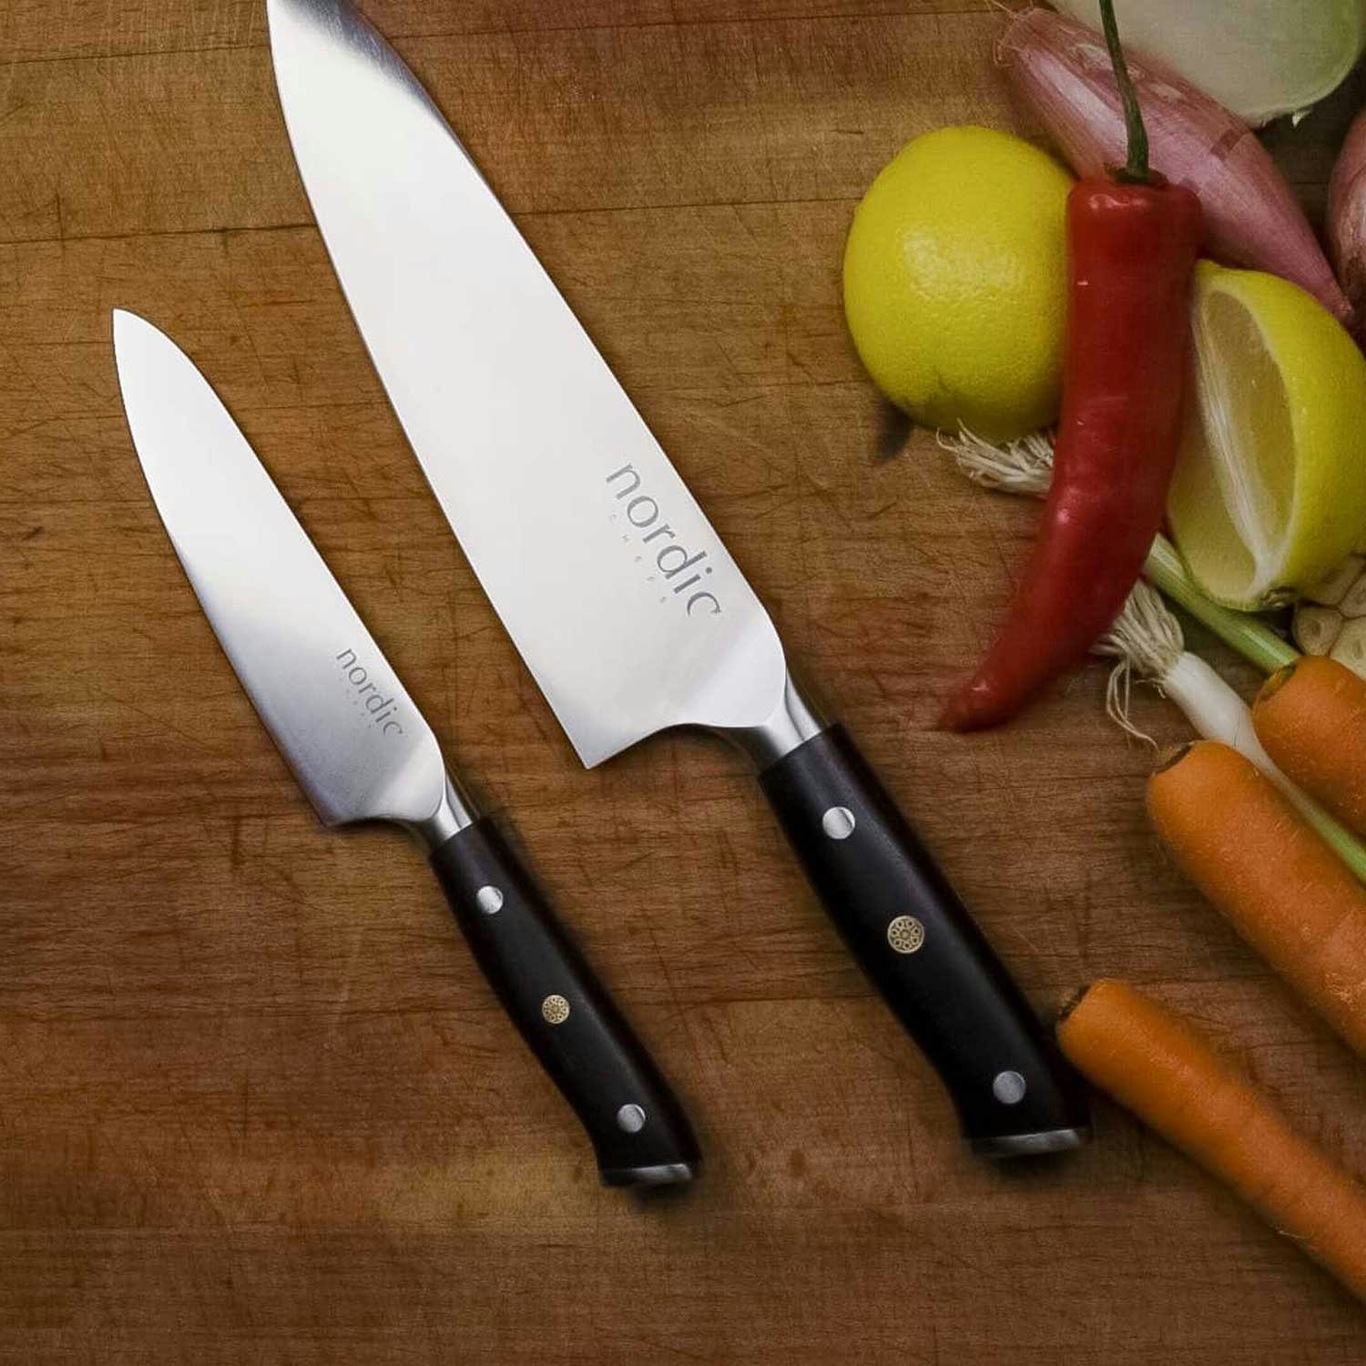 https://royaldesign.com/image/2/nordic-chef-nordic-knife-sets-2-pack-5?w=800&quality=80